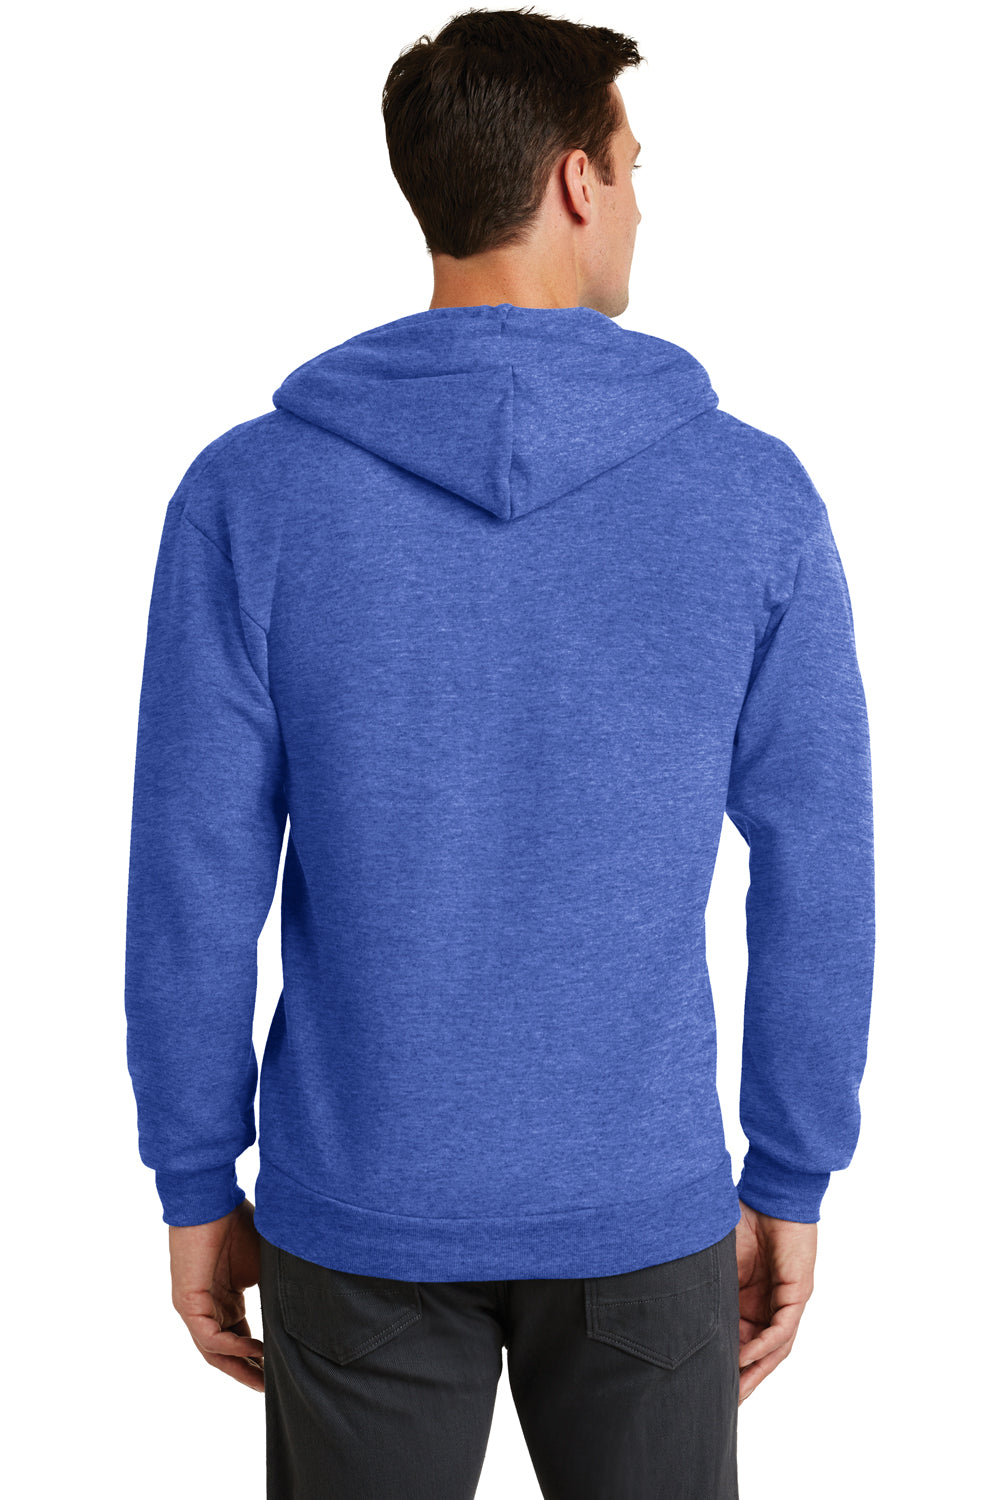 Port & Company PC78ZH Mens Core Fleece Full Zip Hooded Sweatshirt Hoodie Heather Royal Blue Back